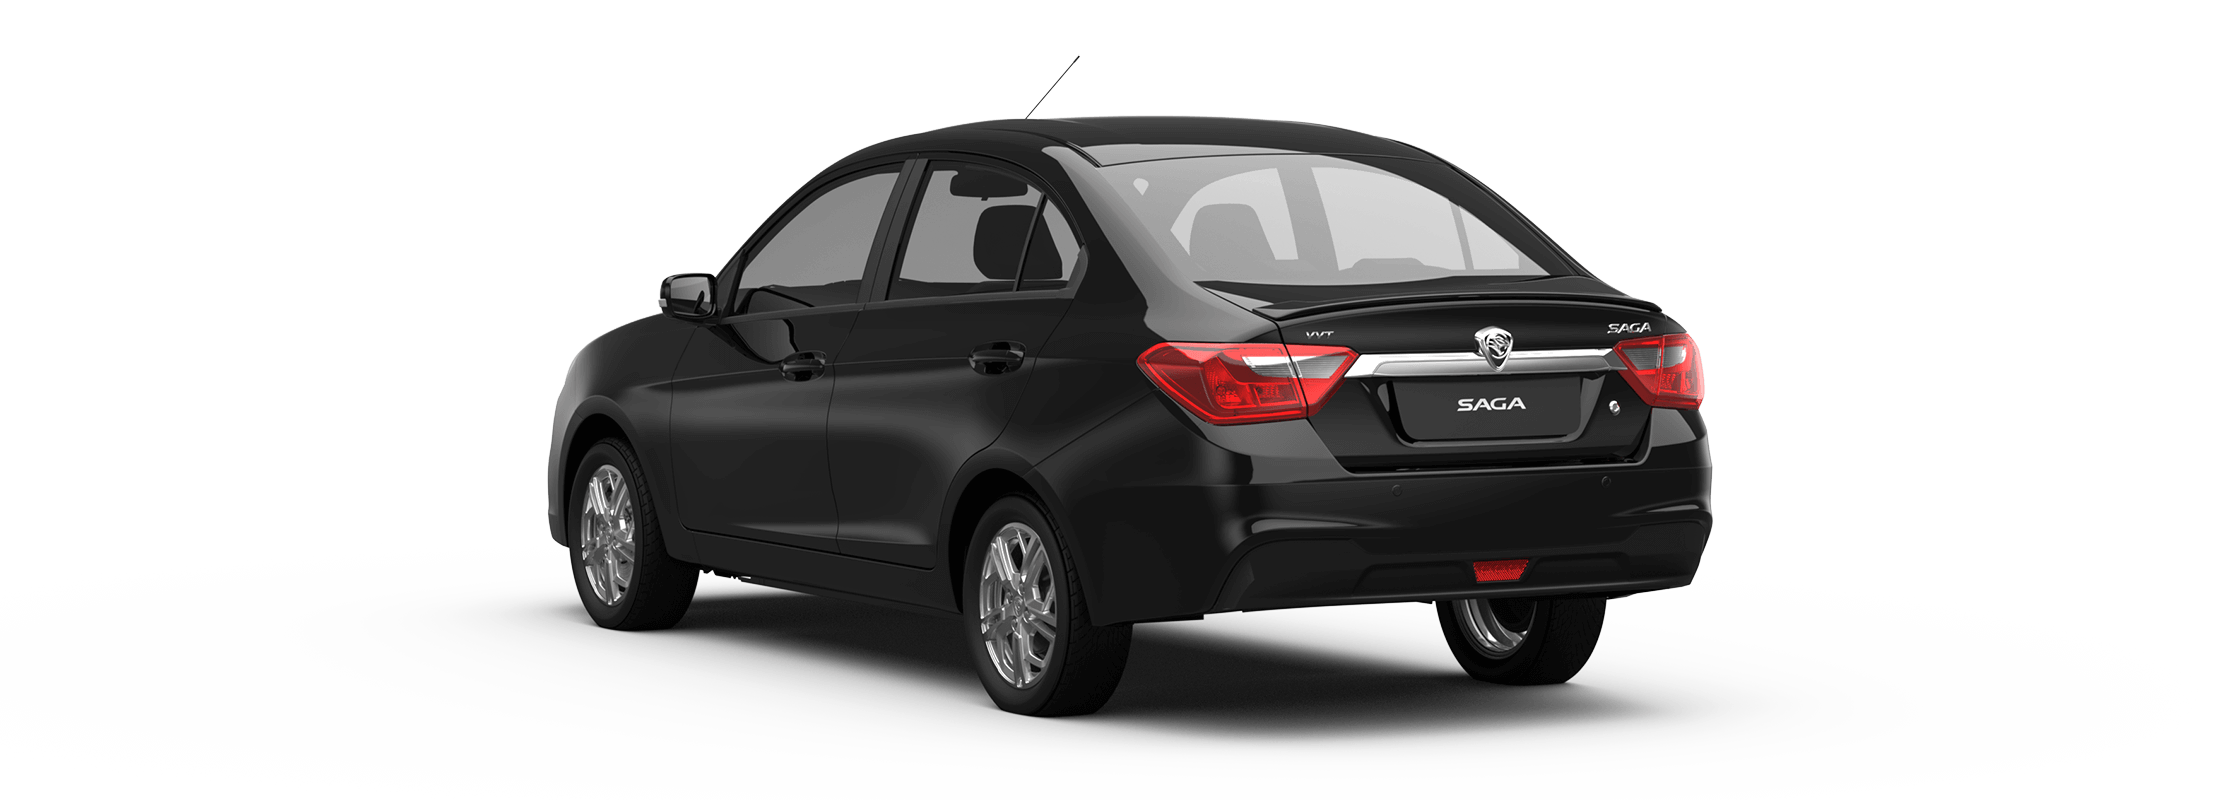 Proton Baru 2016 - 2018-2019 New Car Reviews by WittsEndCandy